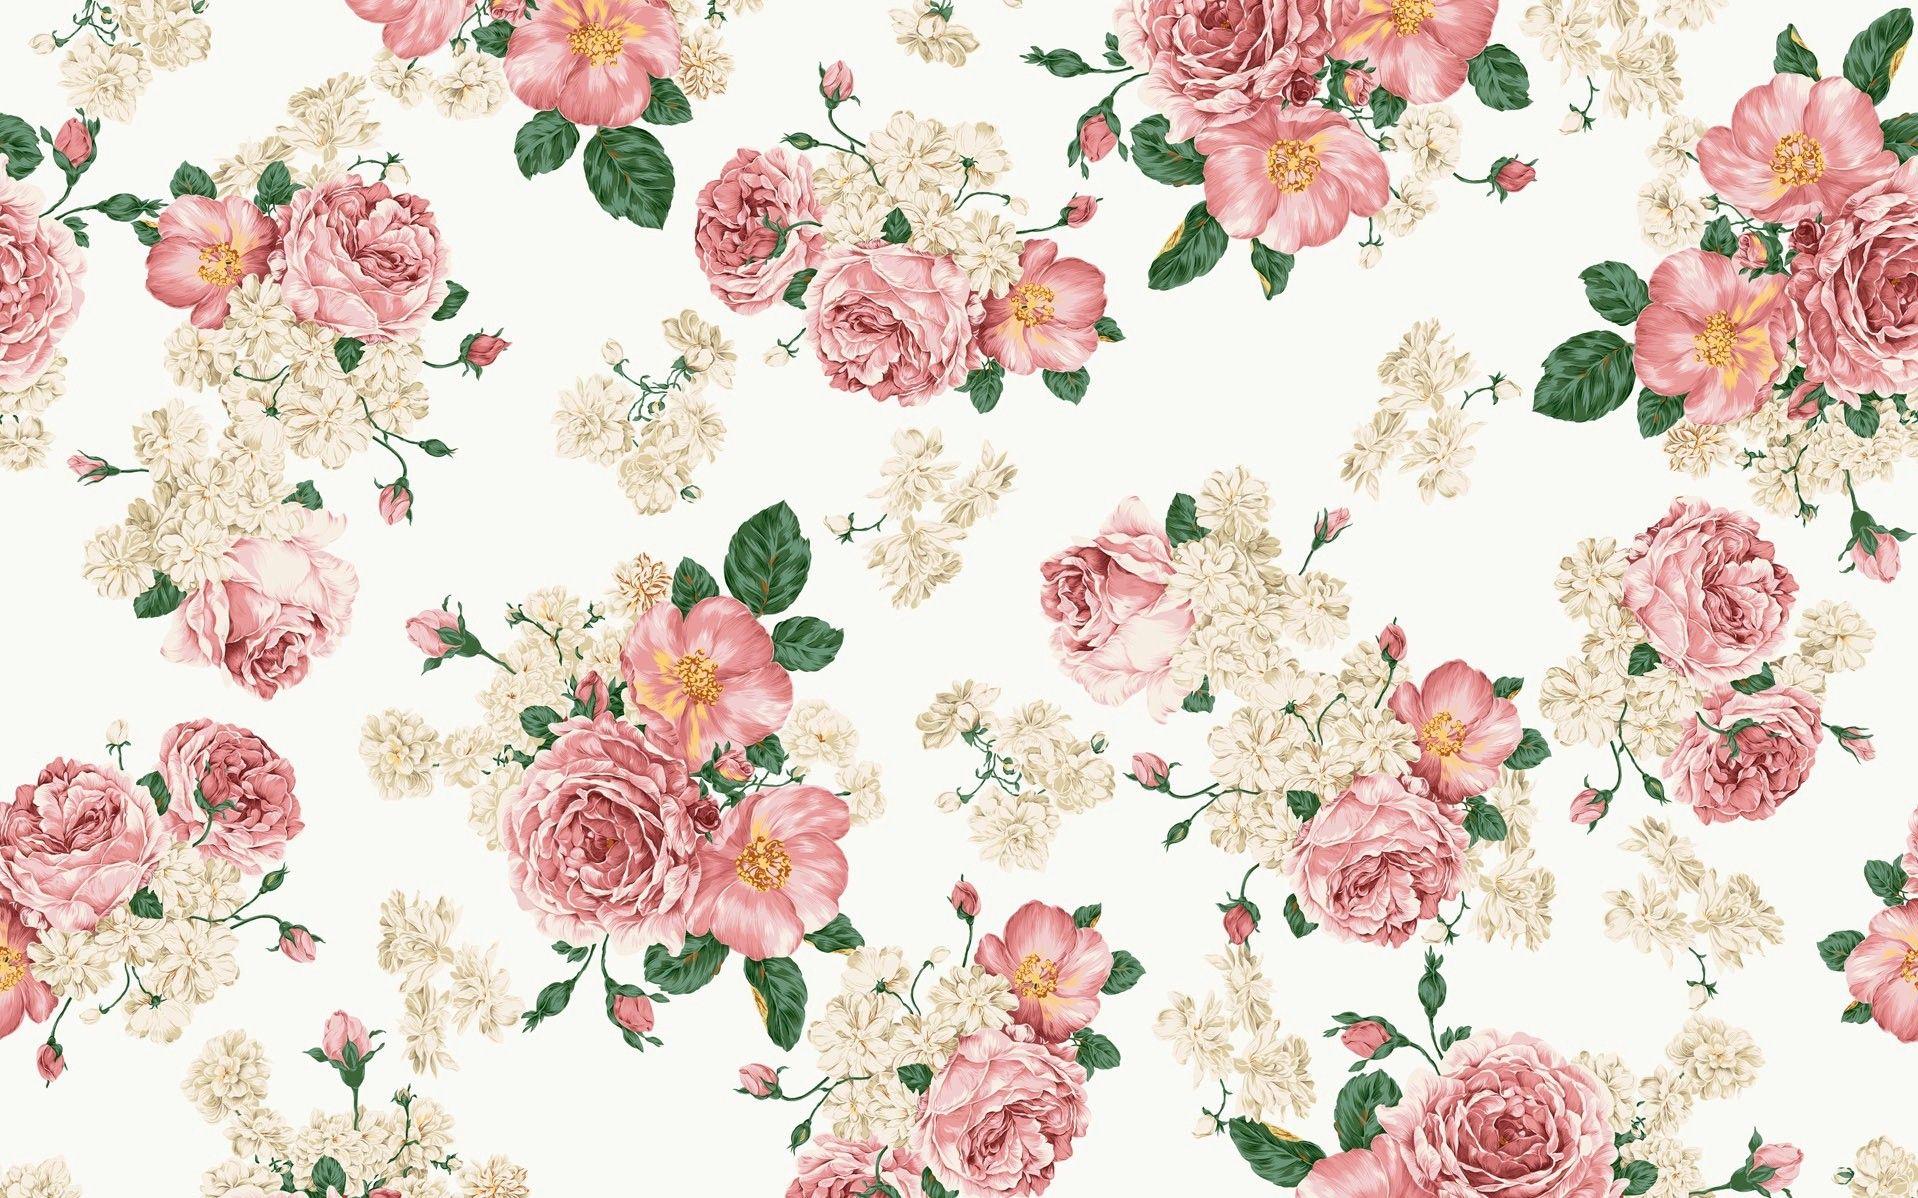 Flowers wallpaper tumblr Gallery